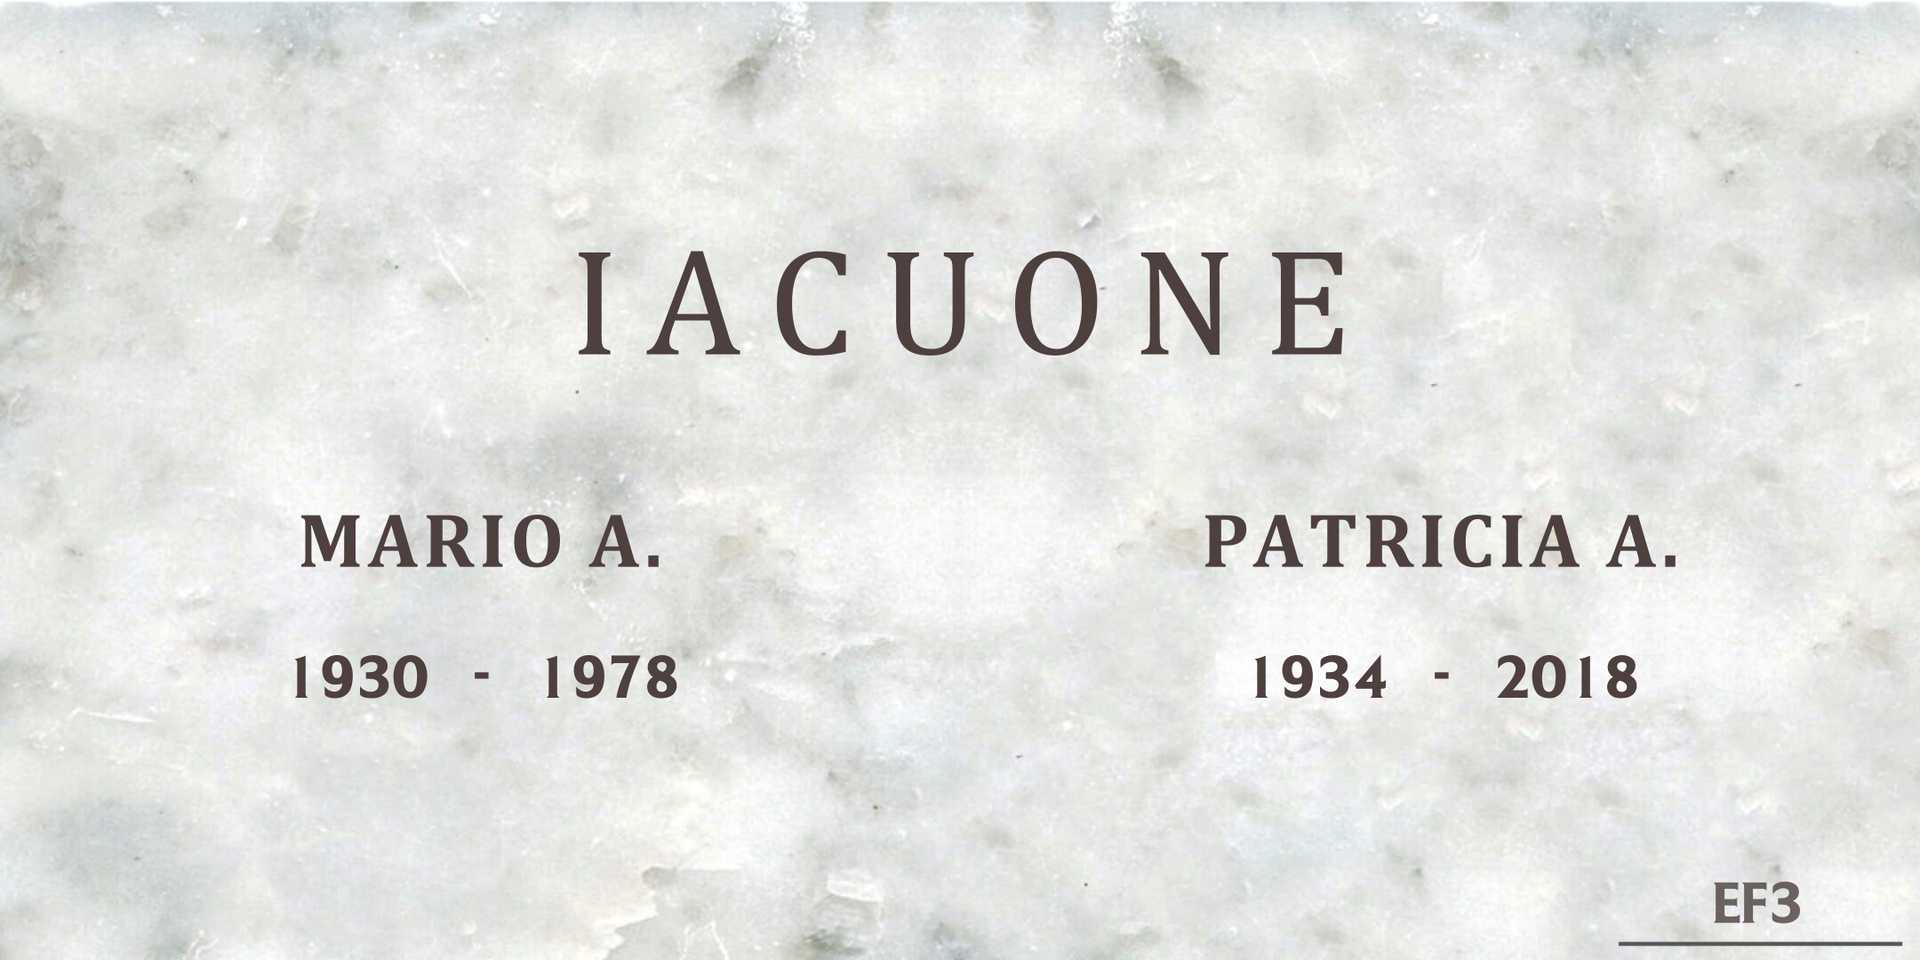 Mario A. Iacuone's grave